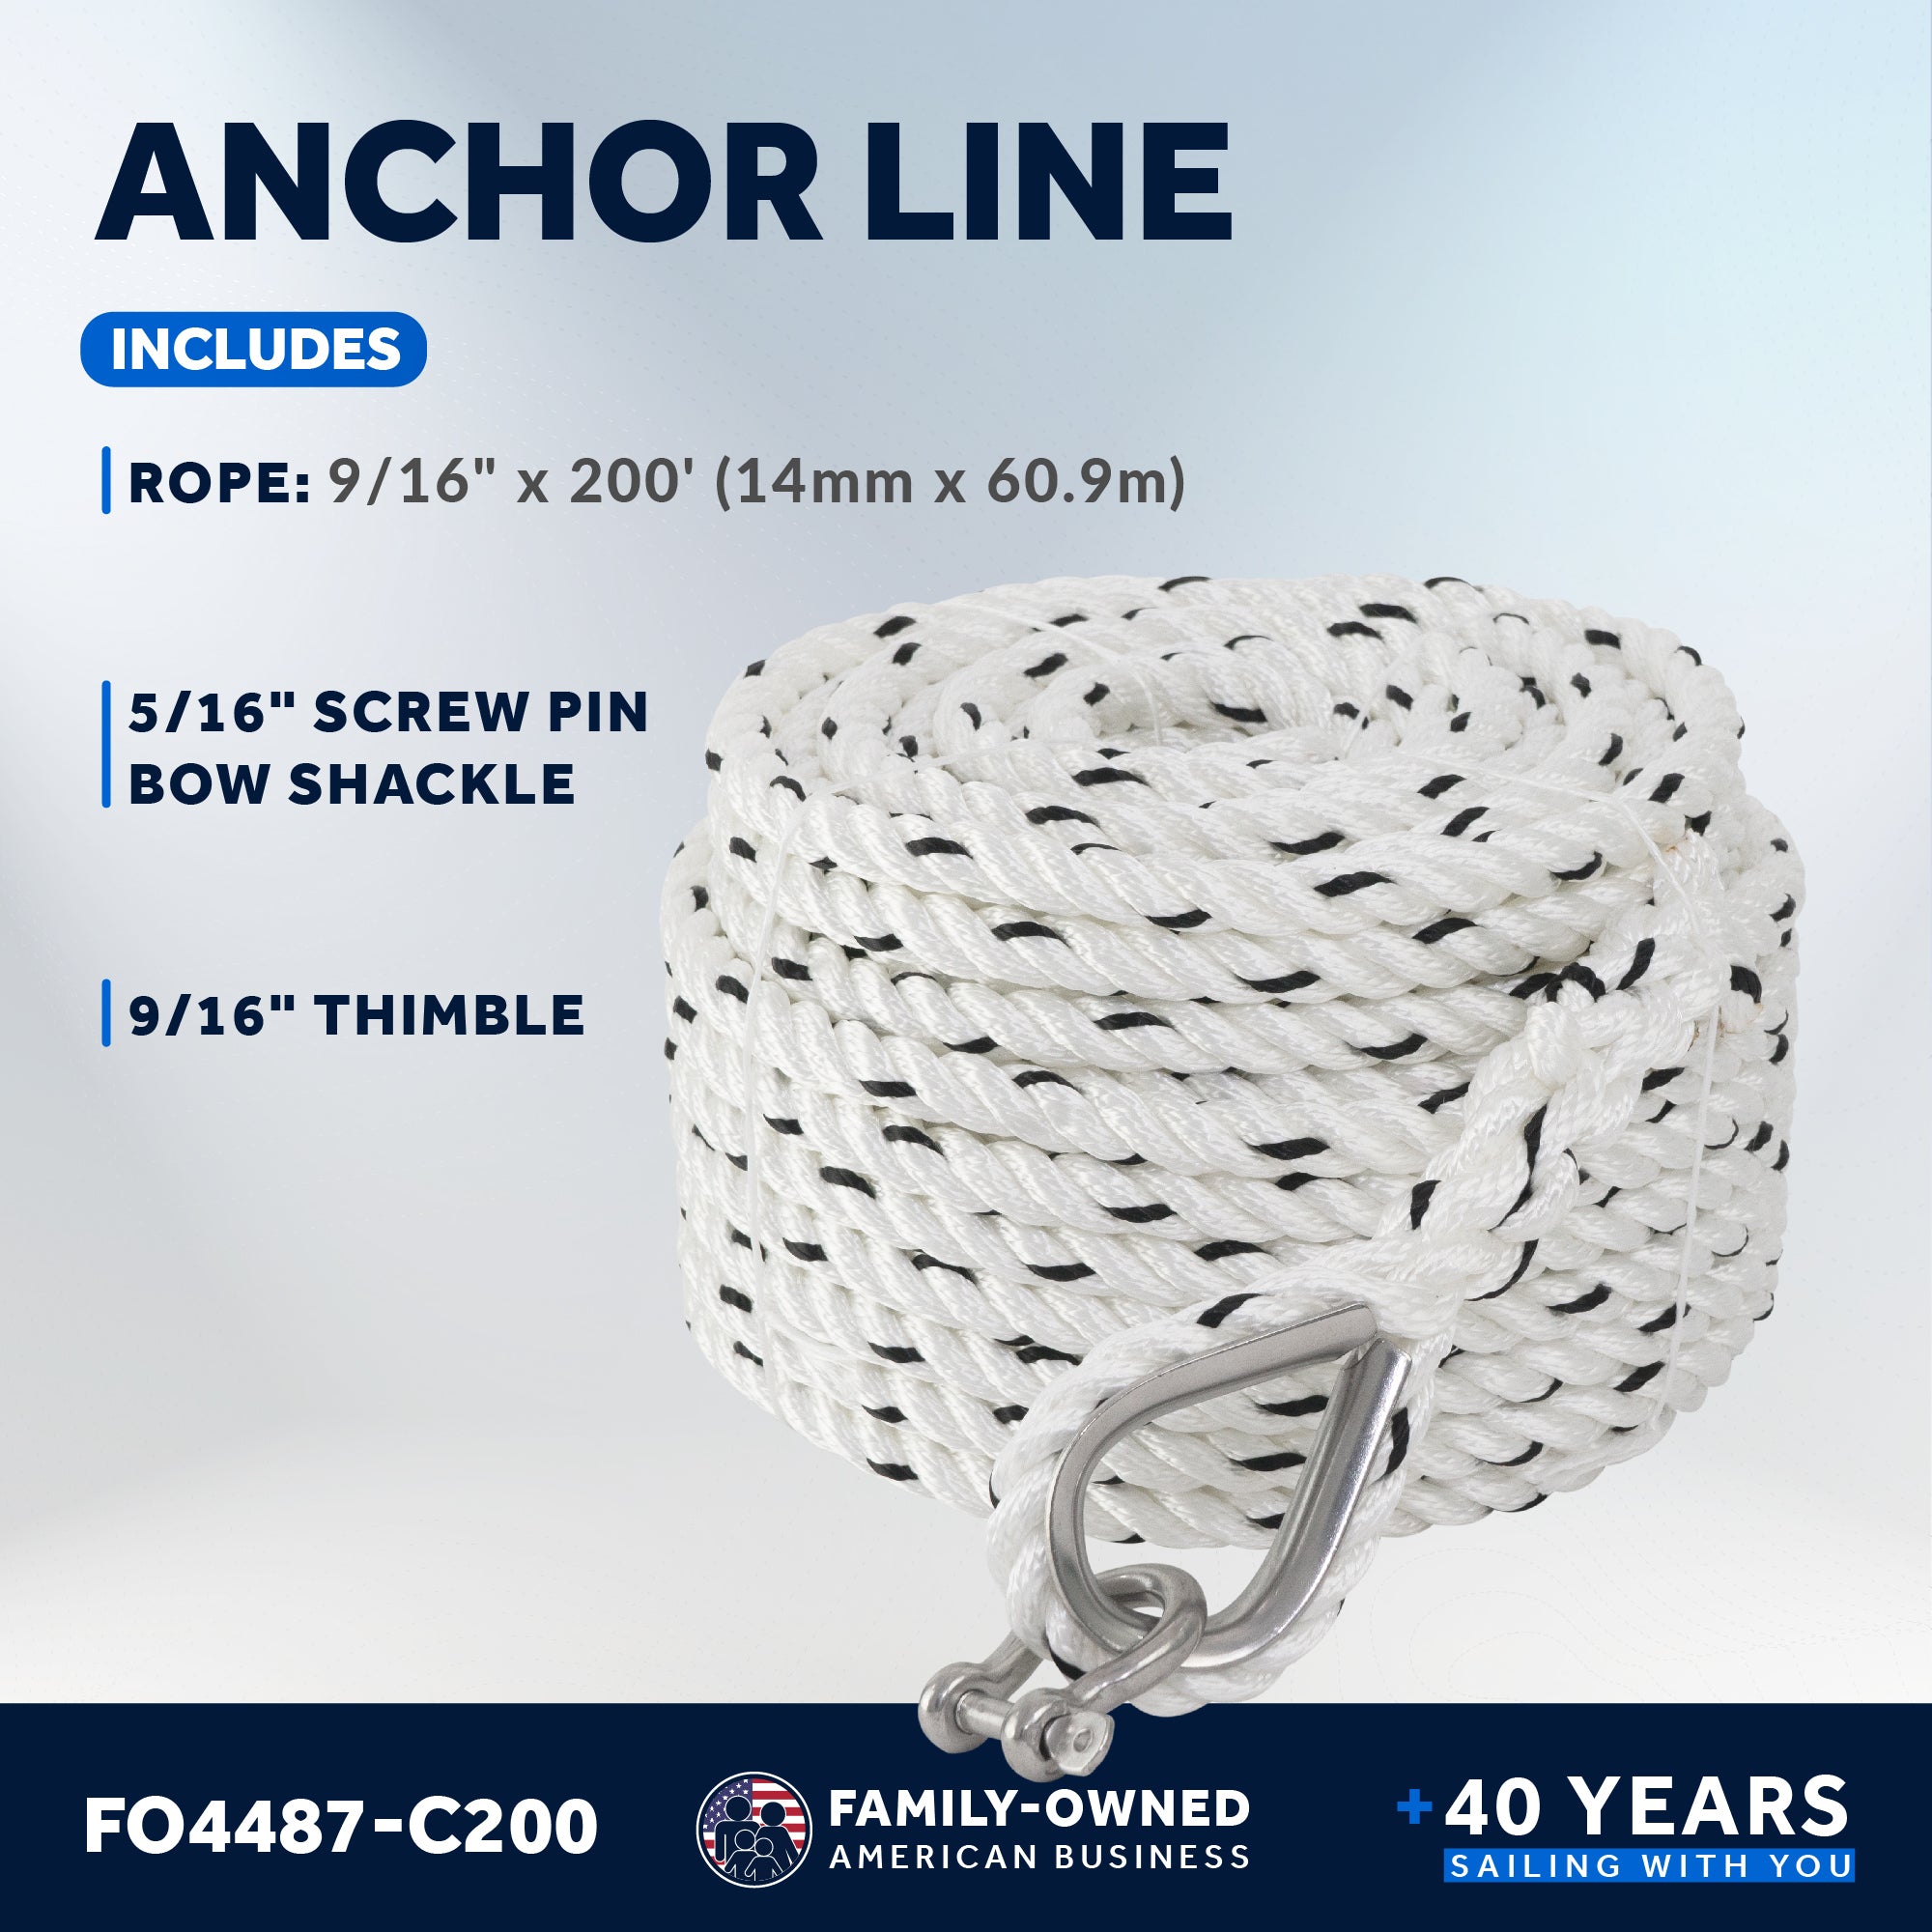 Anchor Line 9/16" x 200', 3-Strand Nylon, Spliced - FO4487-C200